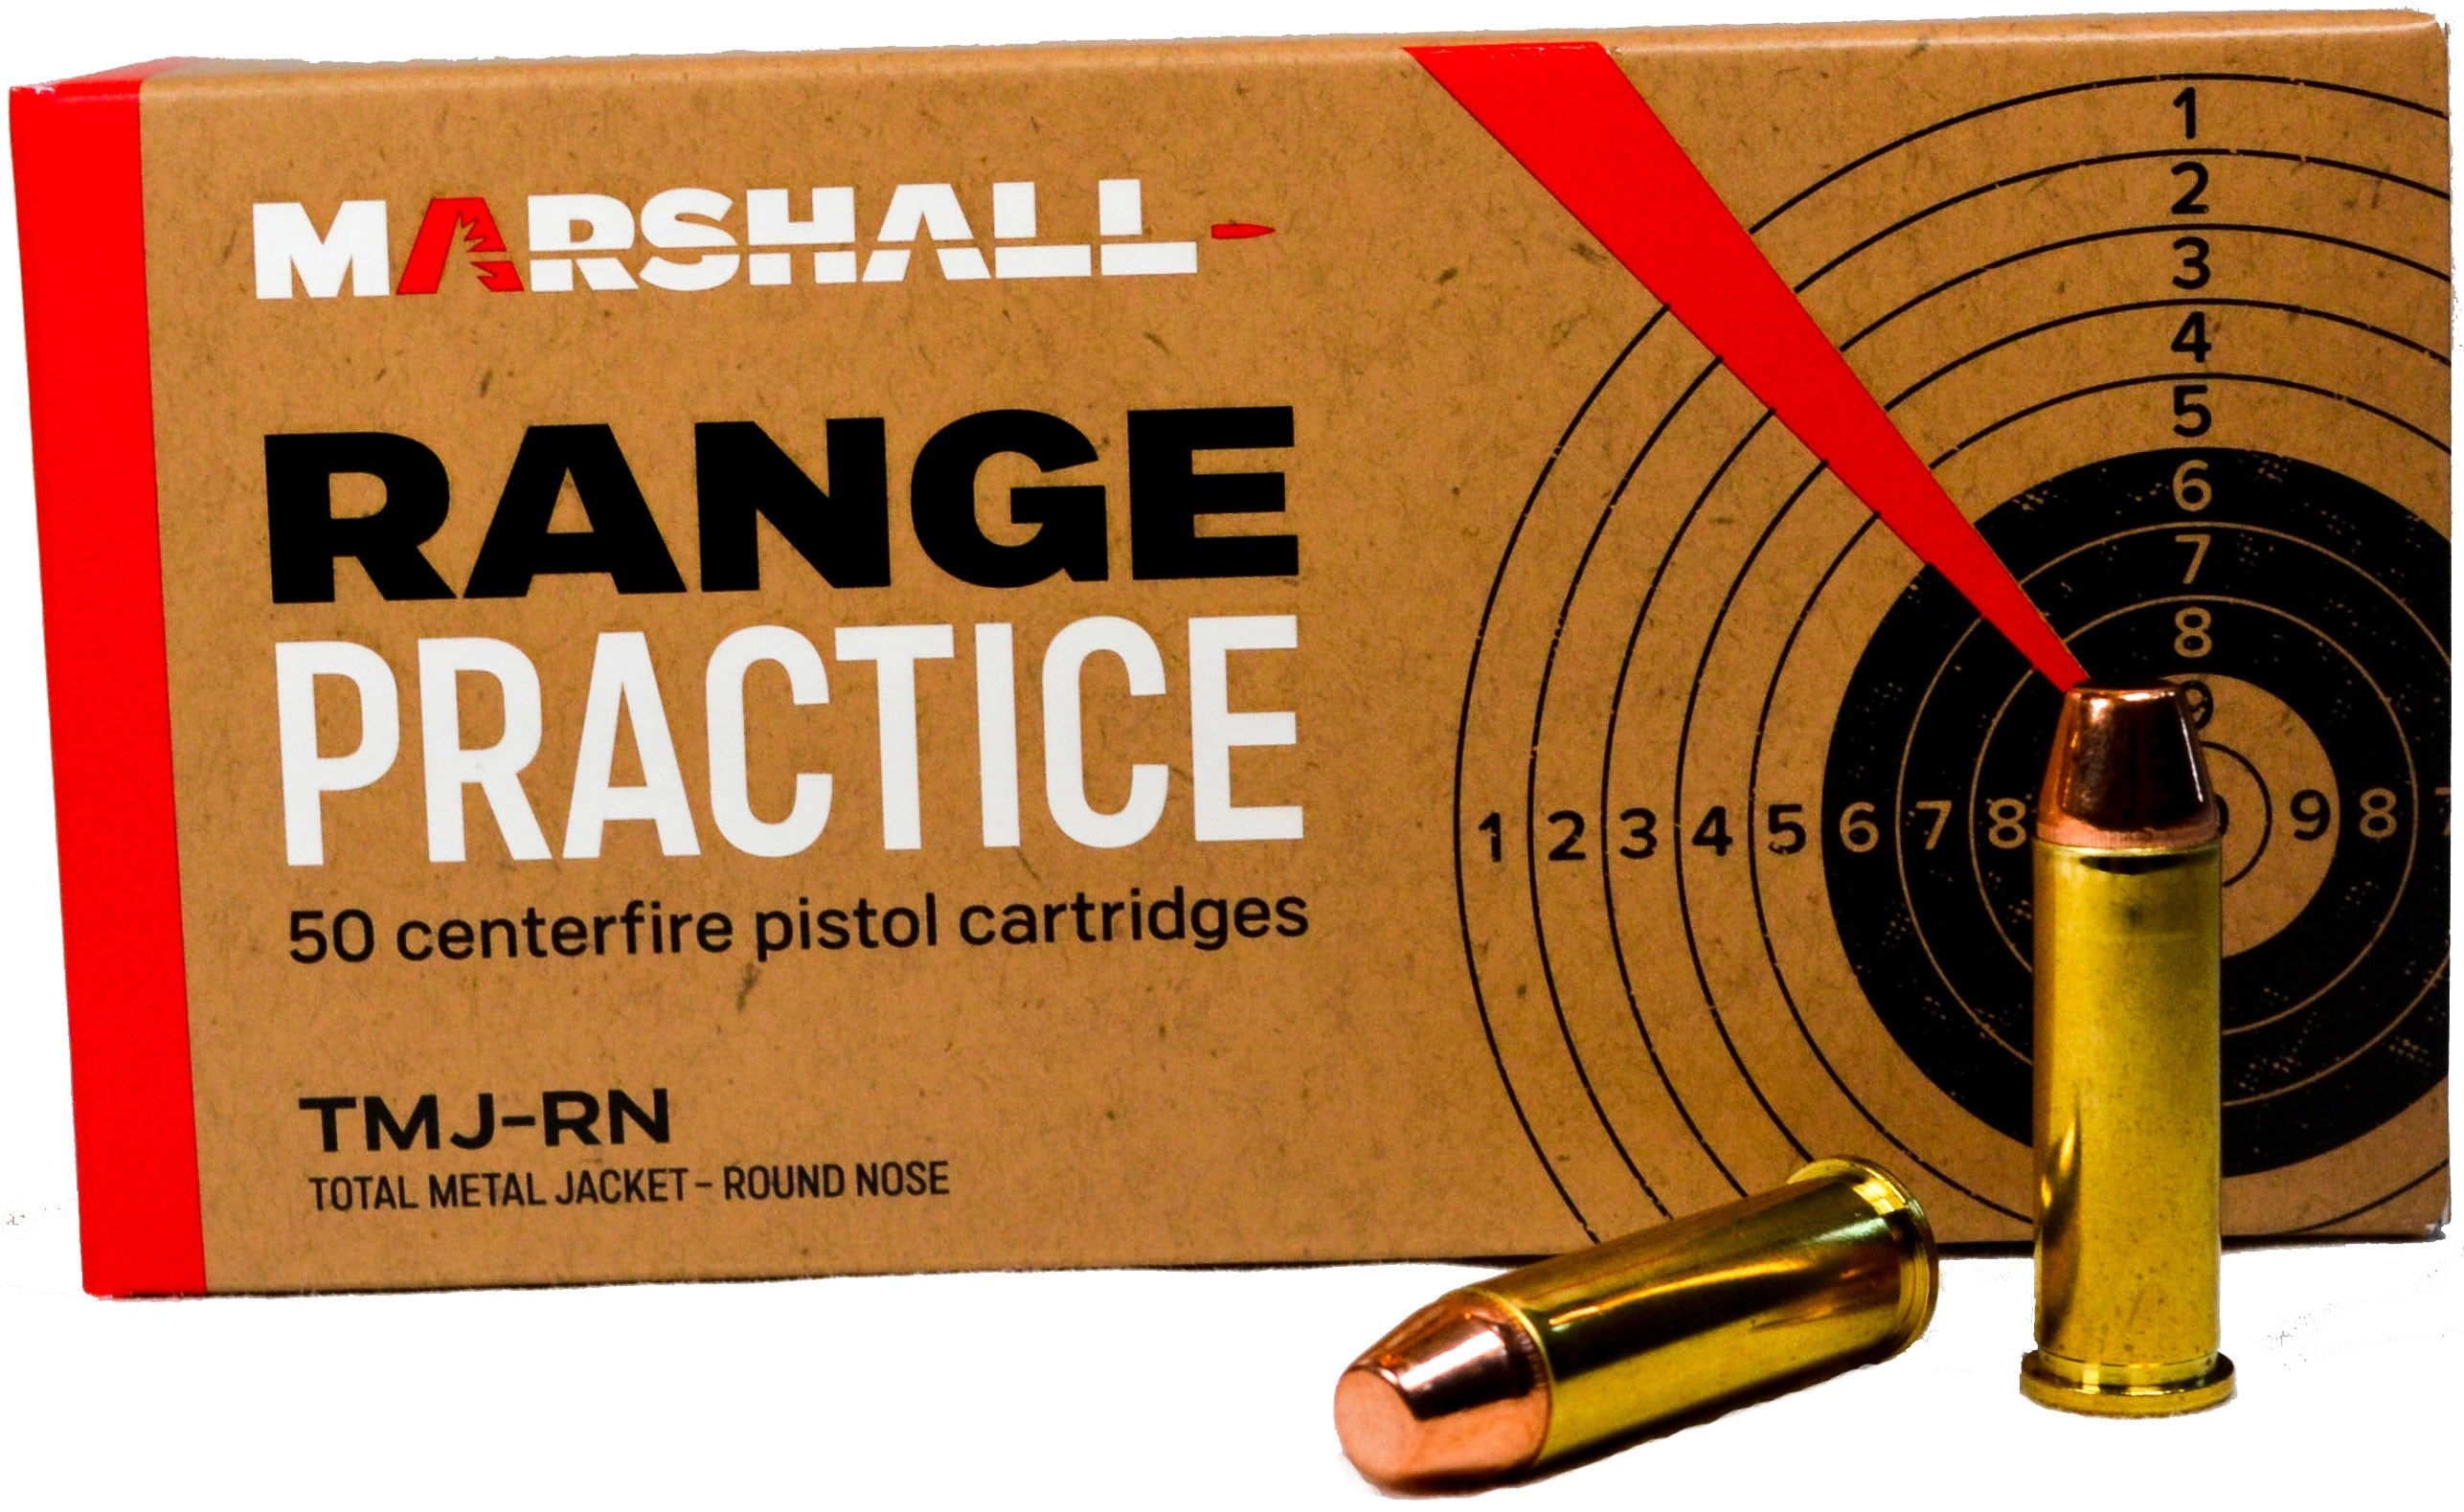 Marshall Munitions - Range Practice .357 Mag 158g